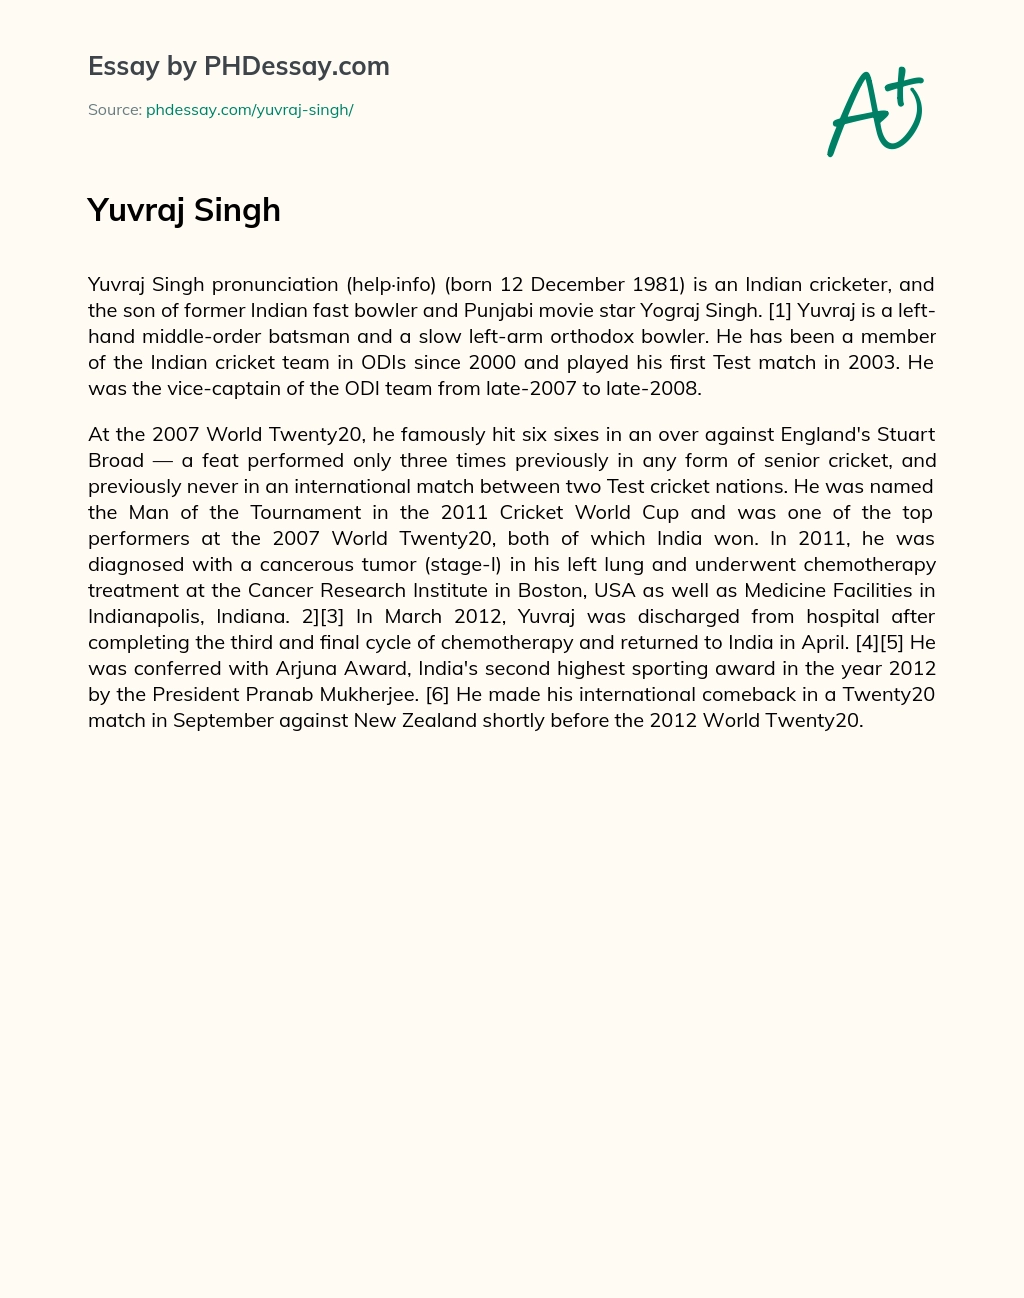 Yuvraj Singh essay